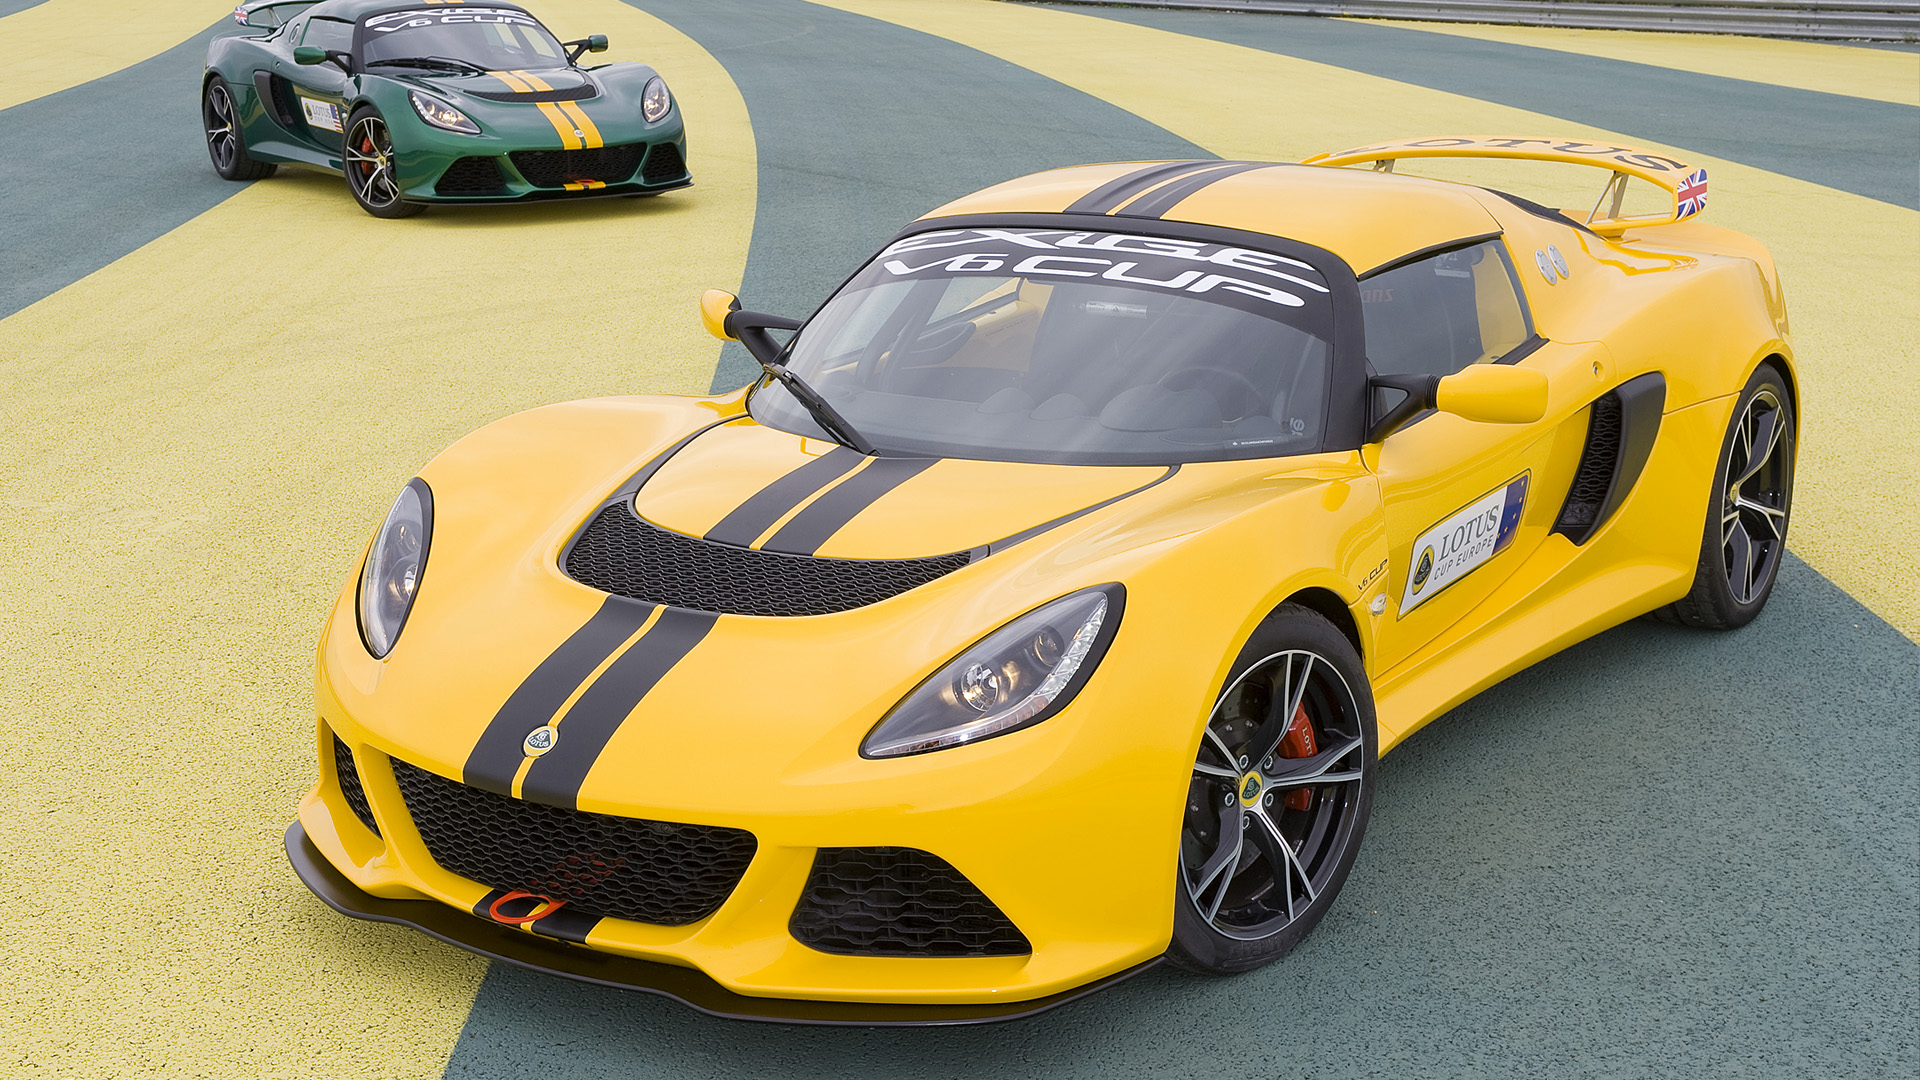  2013 Lotus Exige V6 Cup Wallpaper.